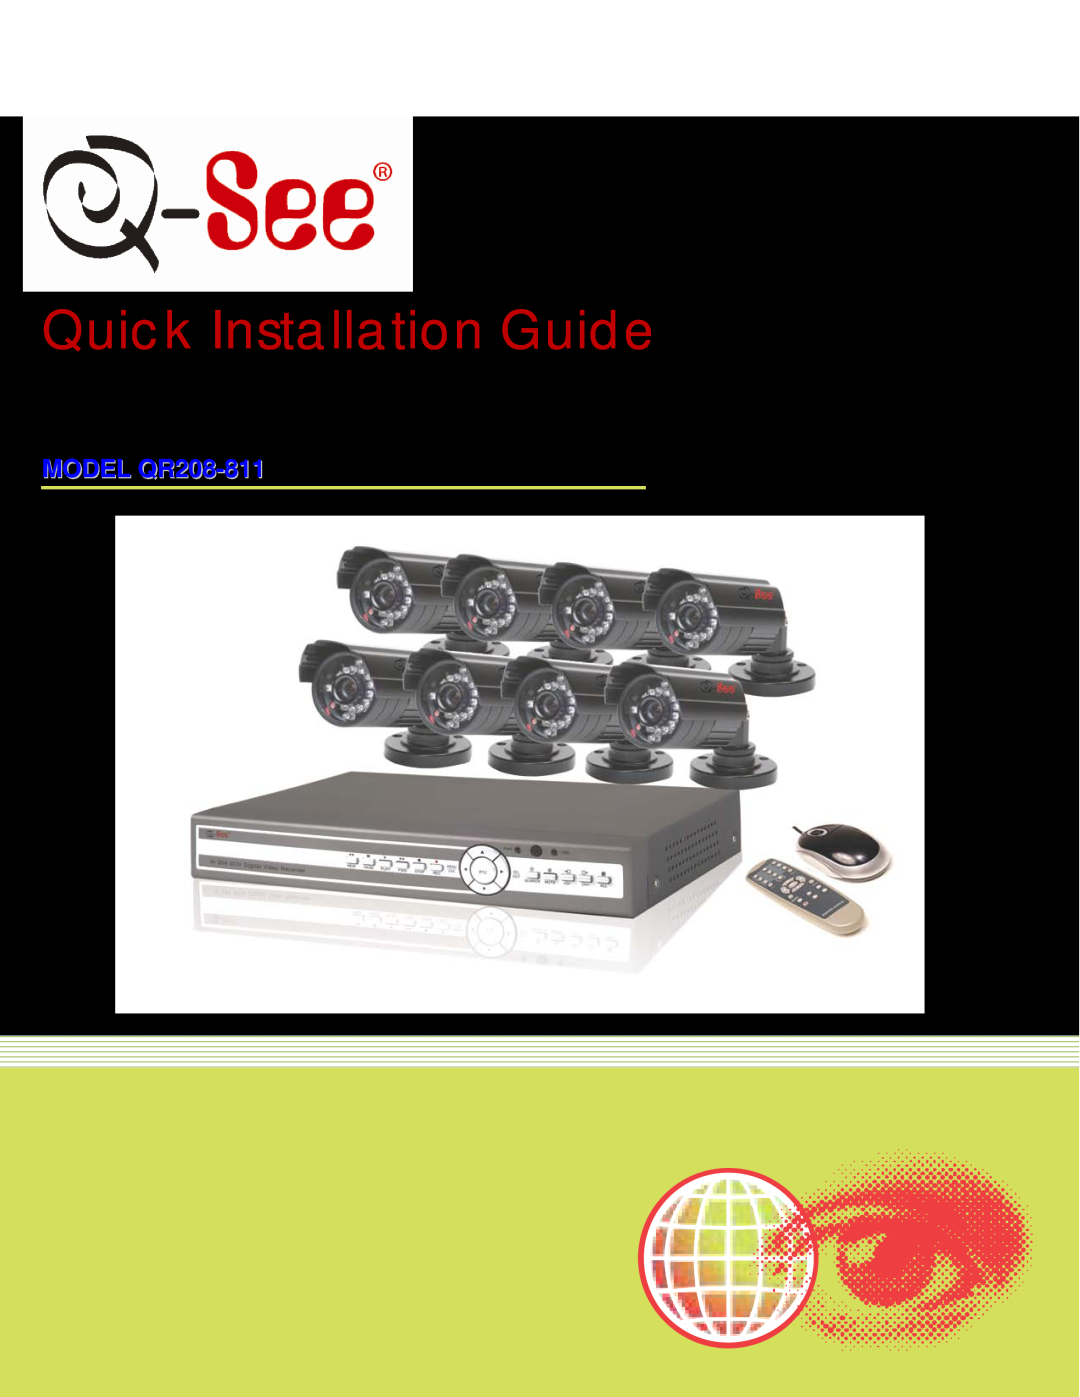 Q-See manual Quick Installation Guide, Color CMOS Camera Kits, MODEL QR208-811 